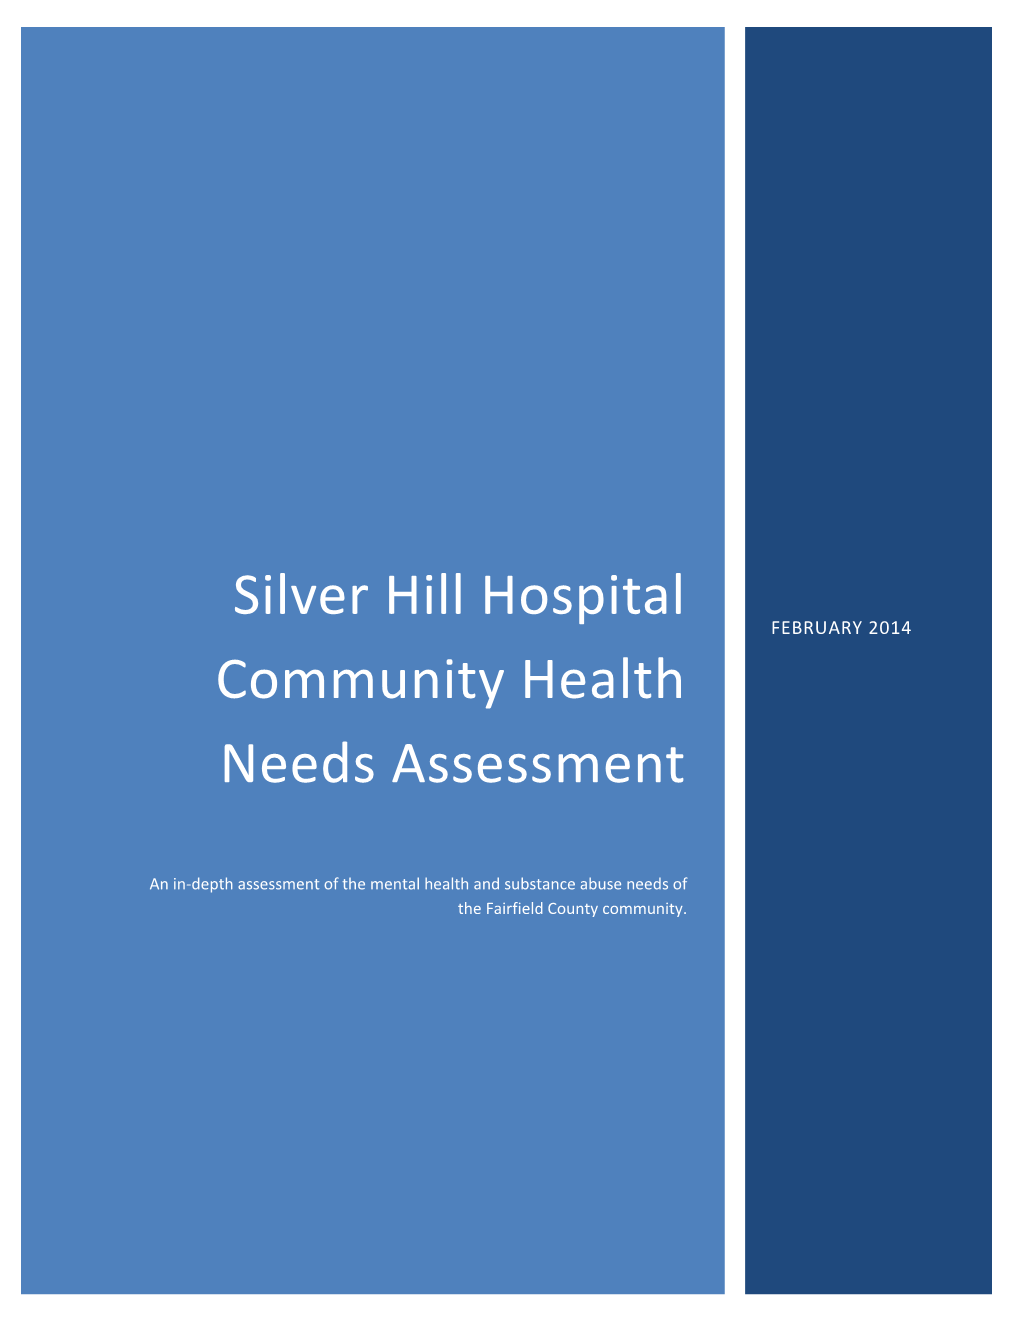 SILVER HILL HOSPITAL COMMUNITY HEALTH NEEDS ASSESSMENT February 2014